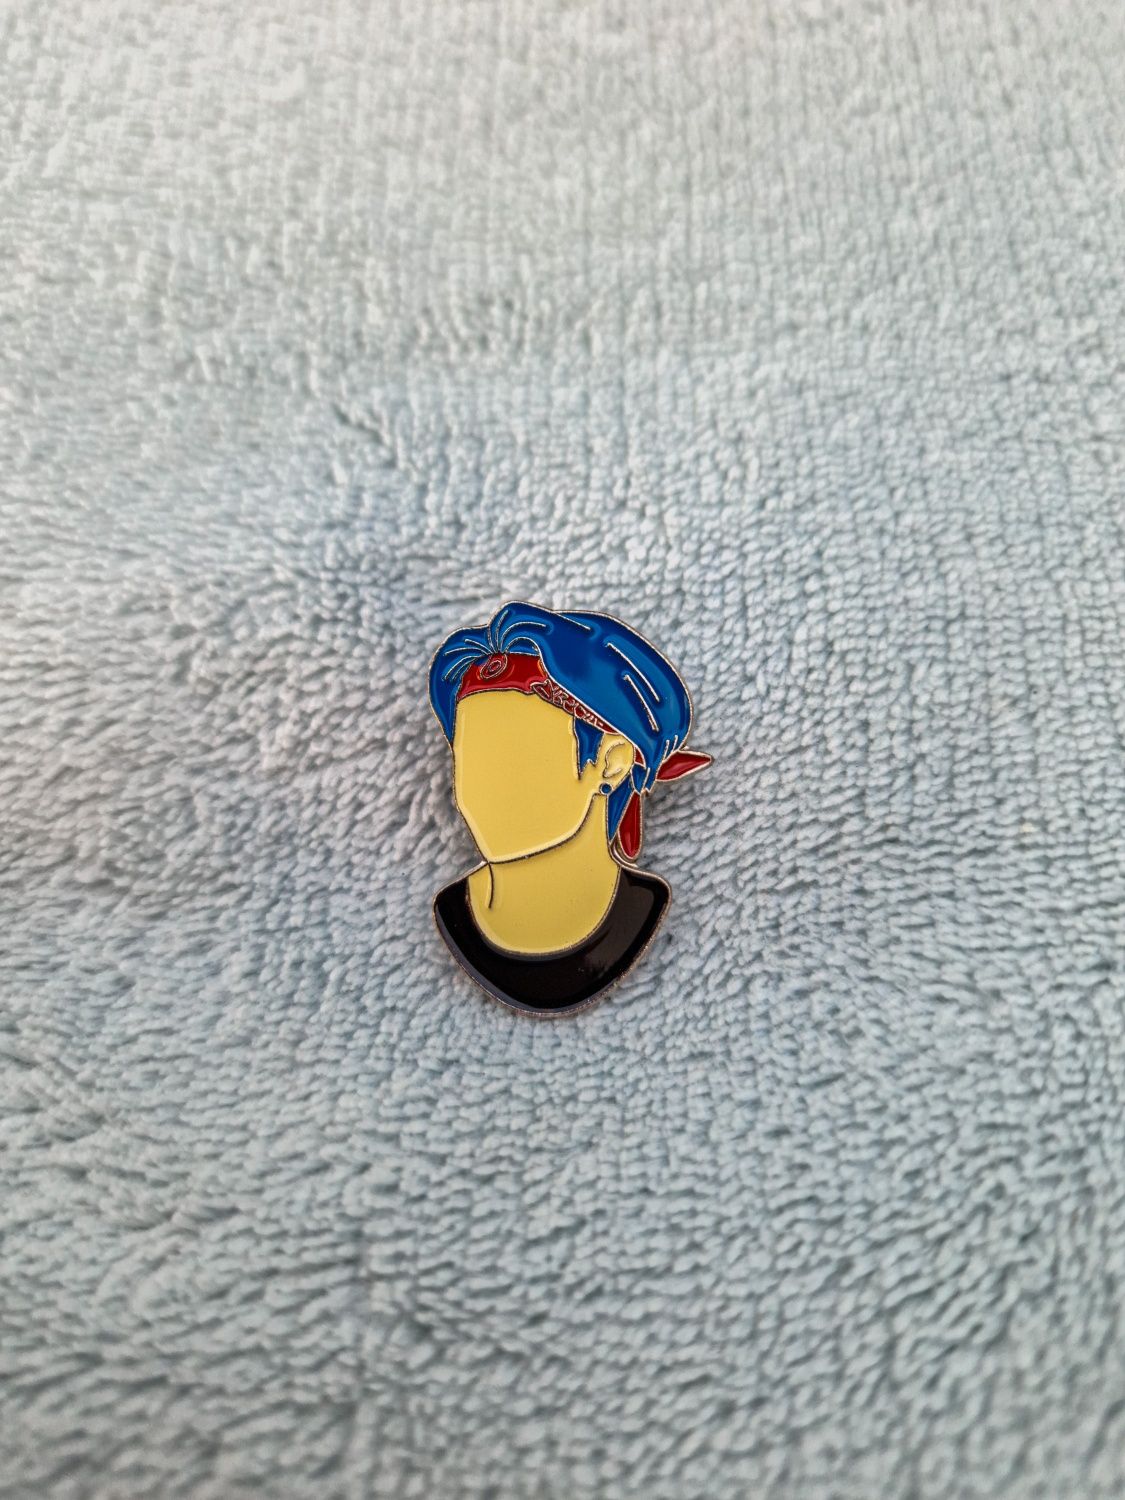 Przypinka pin pins broszka kpop anime alternative